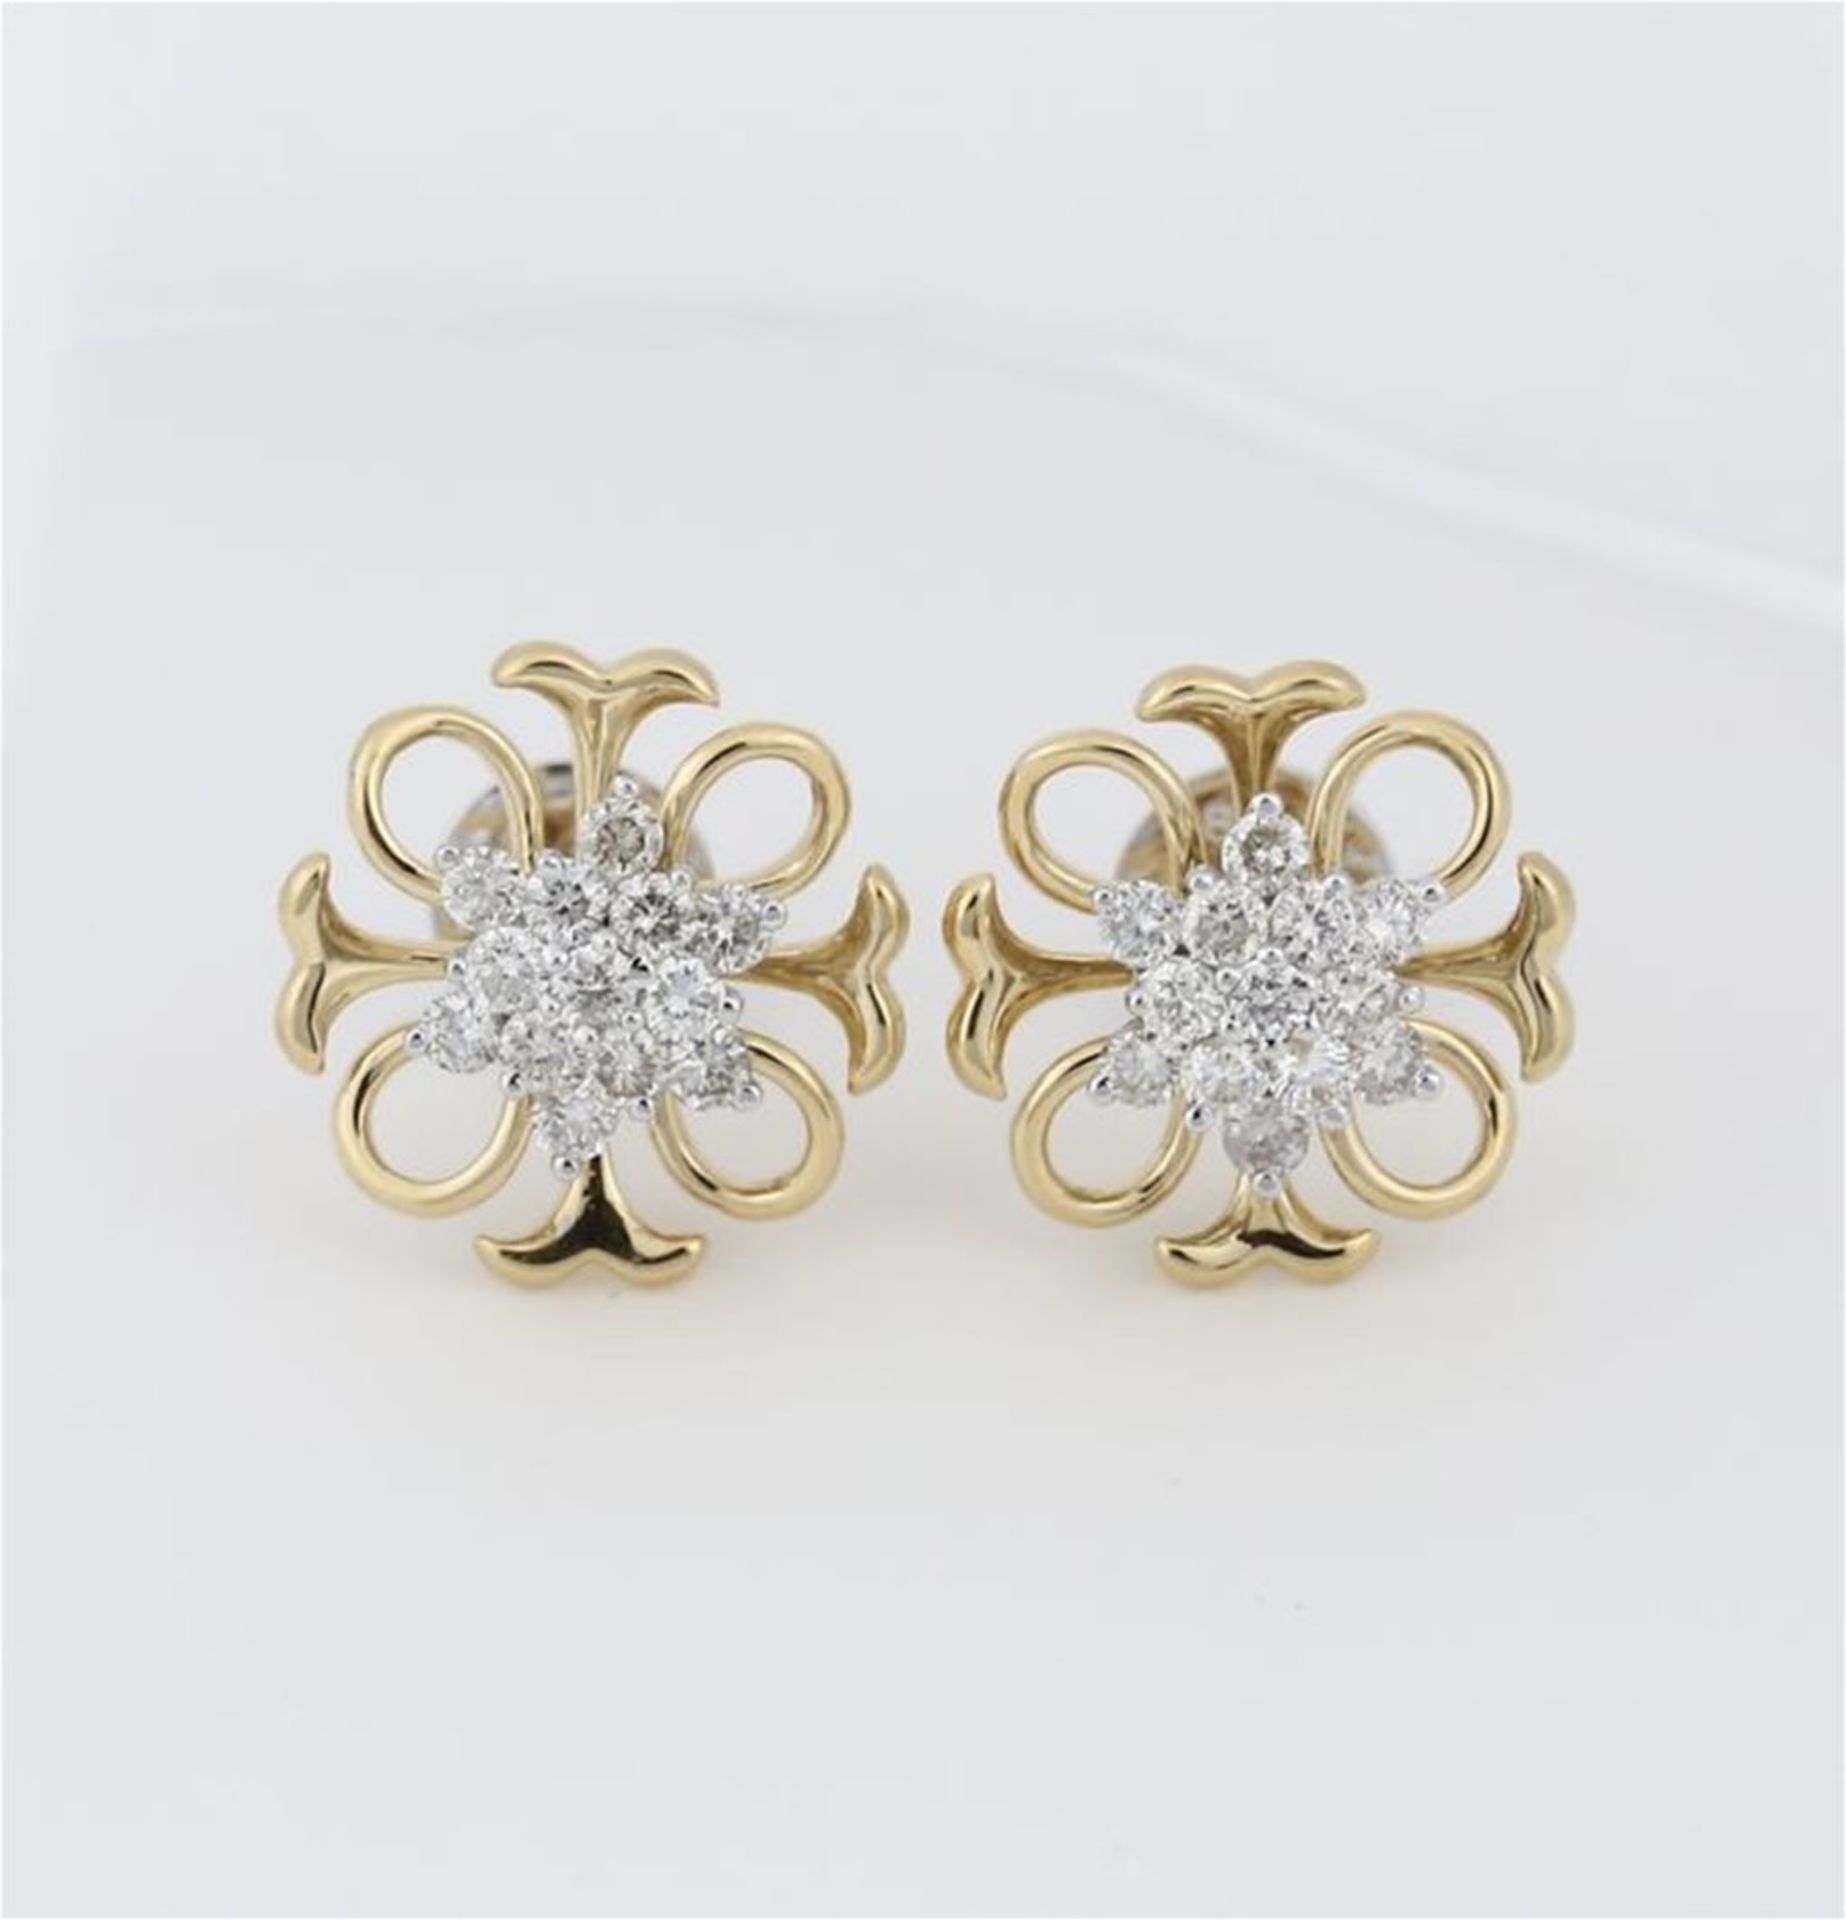 IGI Certified 18 K/750 Yellow Gold Diamond Earrings